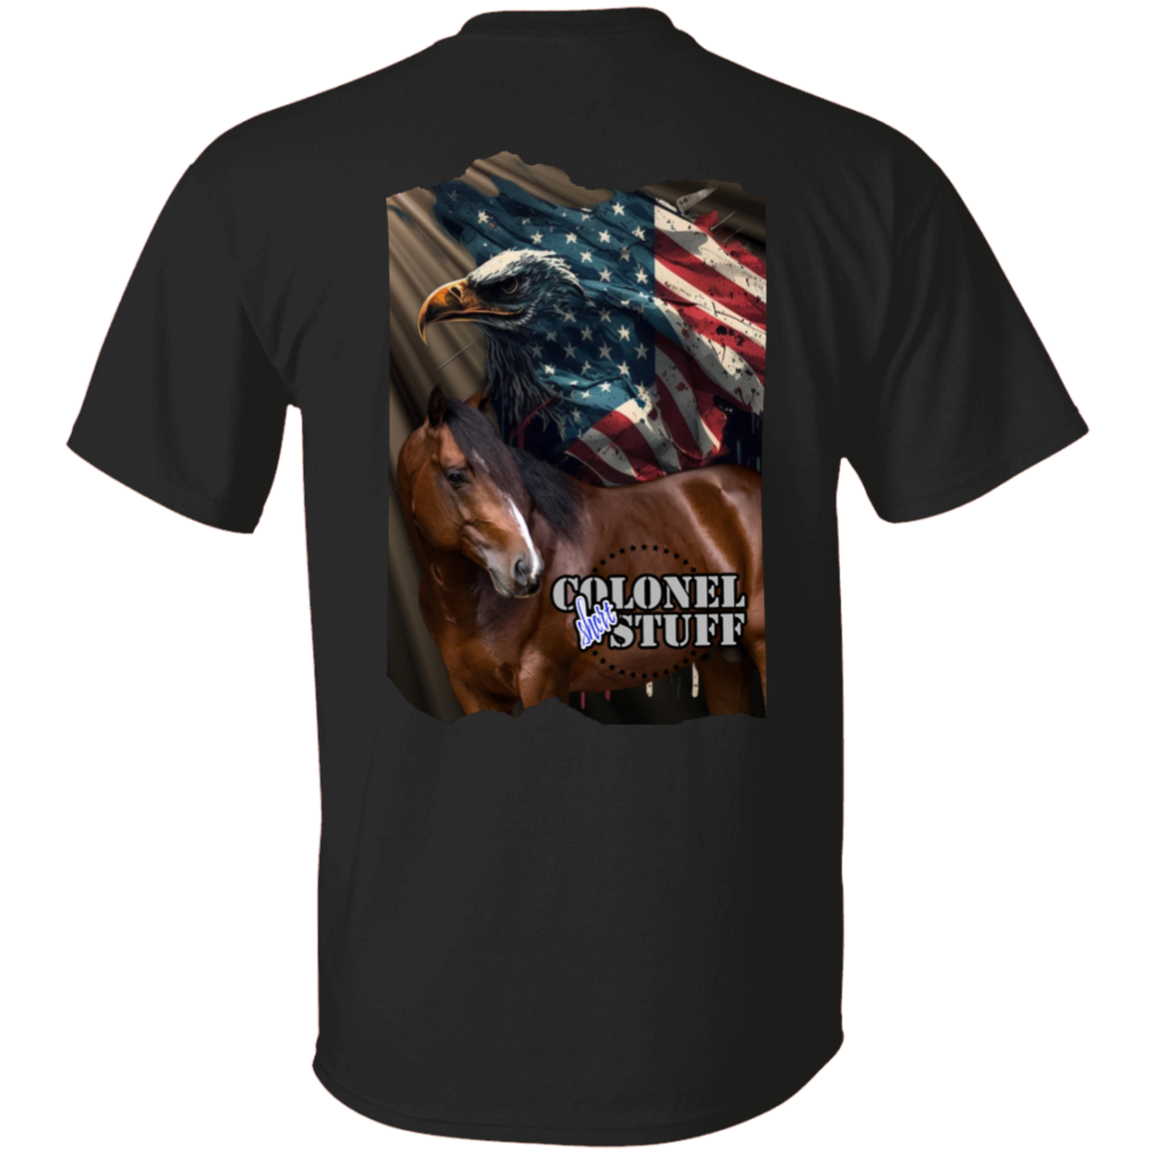 Colonel Short Stuff Patriotic Shirt